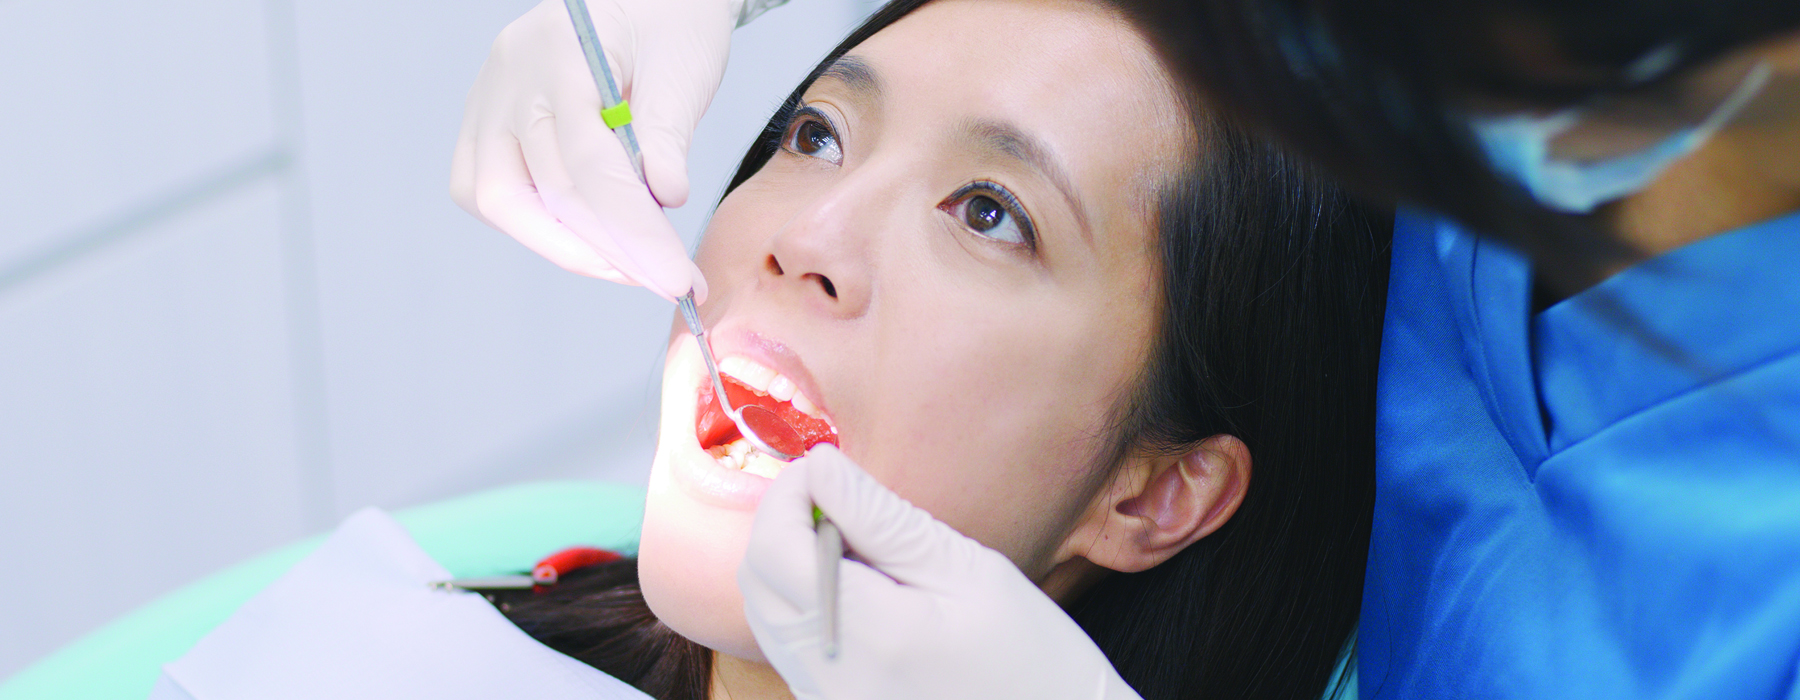 Understanding your dental coverage